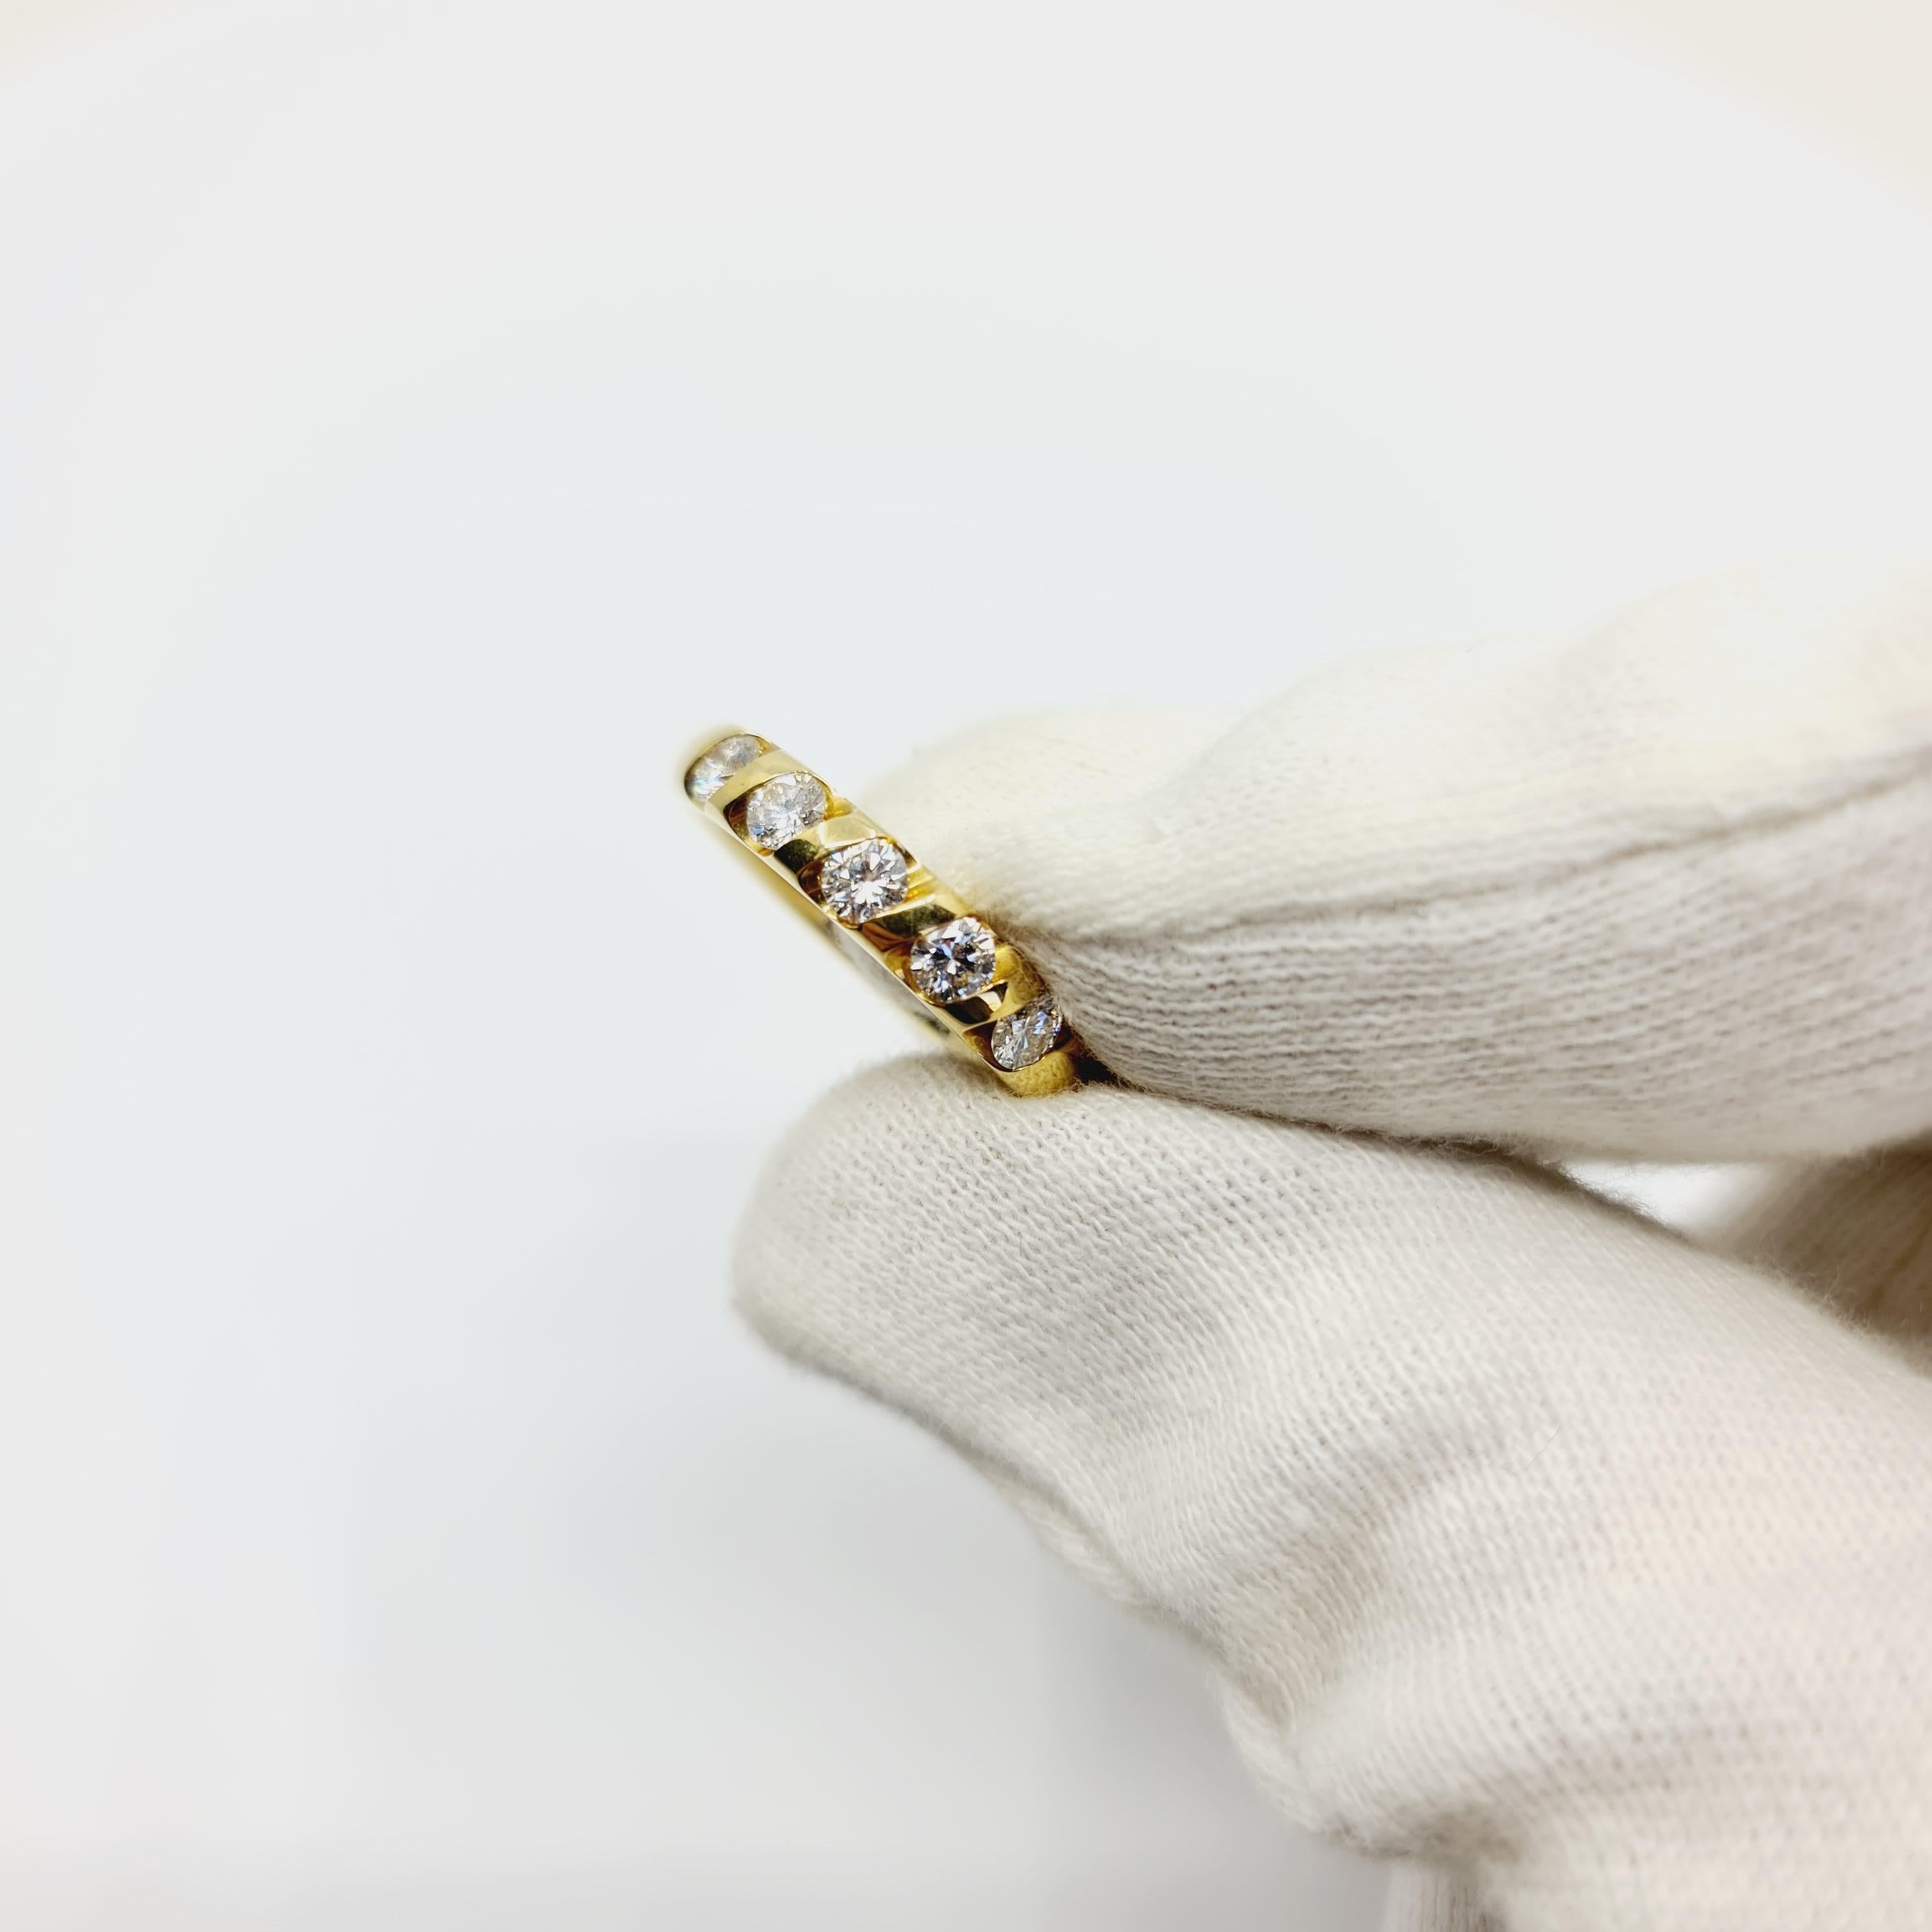 0.75 Carat Diamond Ring G/I1 18k Gold, Brilliant Cut Diamonds For Sale 2